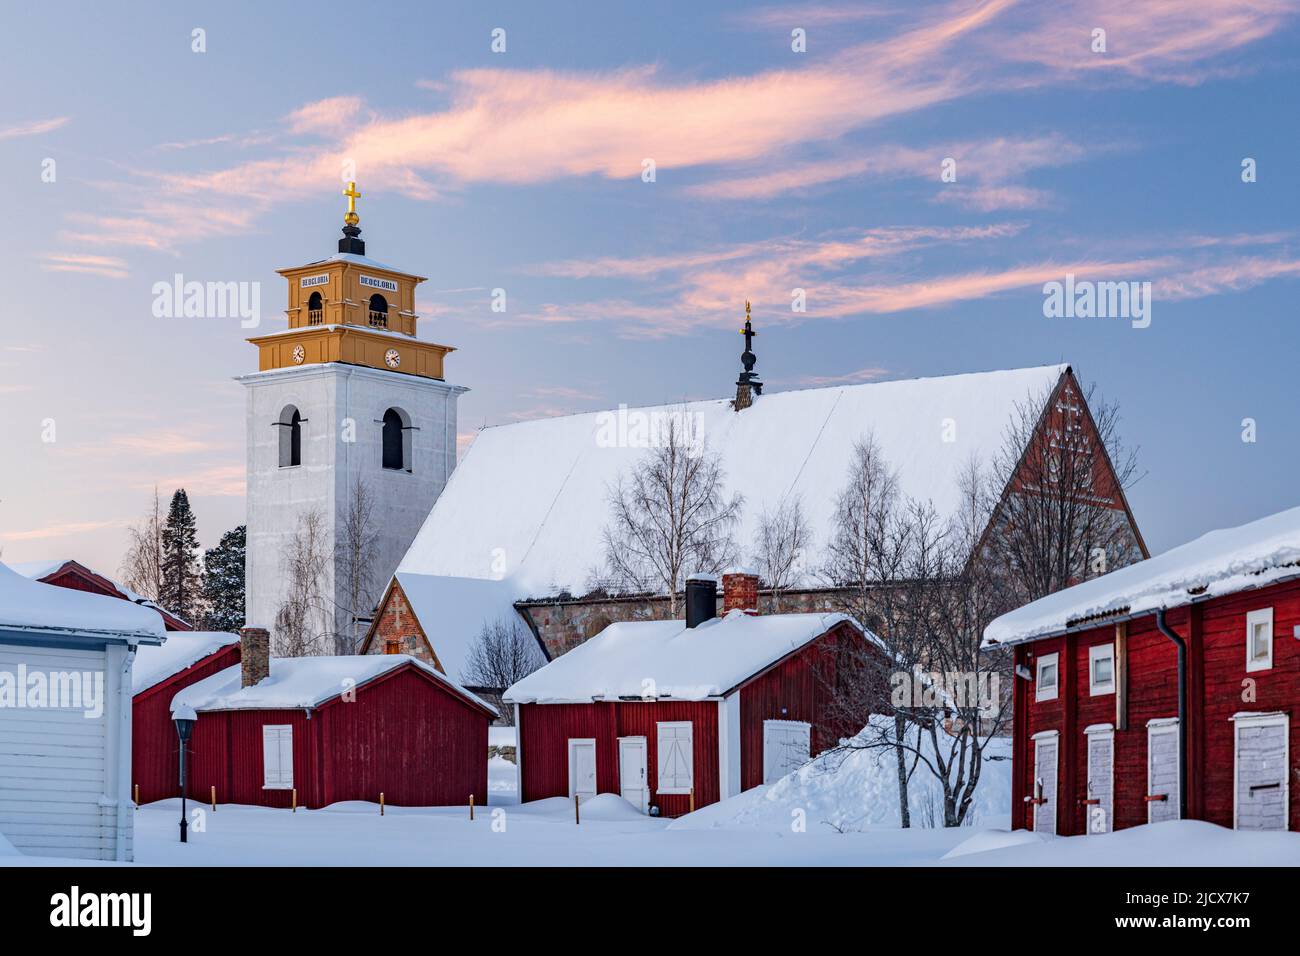 Alte Kirche und malerische Gebäude mit Schnee bei Sonnenuntergang in Gammelstad Altstadt, UNESCO-Weltkulturerbe, Lulea, Schweden, Skandinavien bedeckt Stockfoto